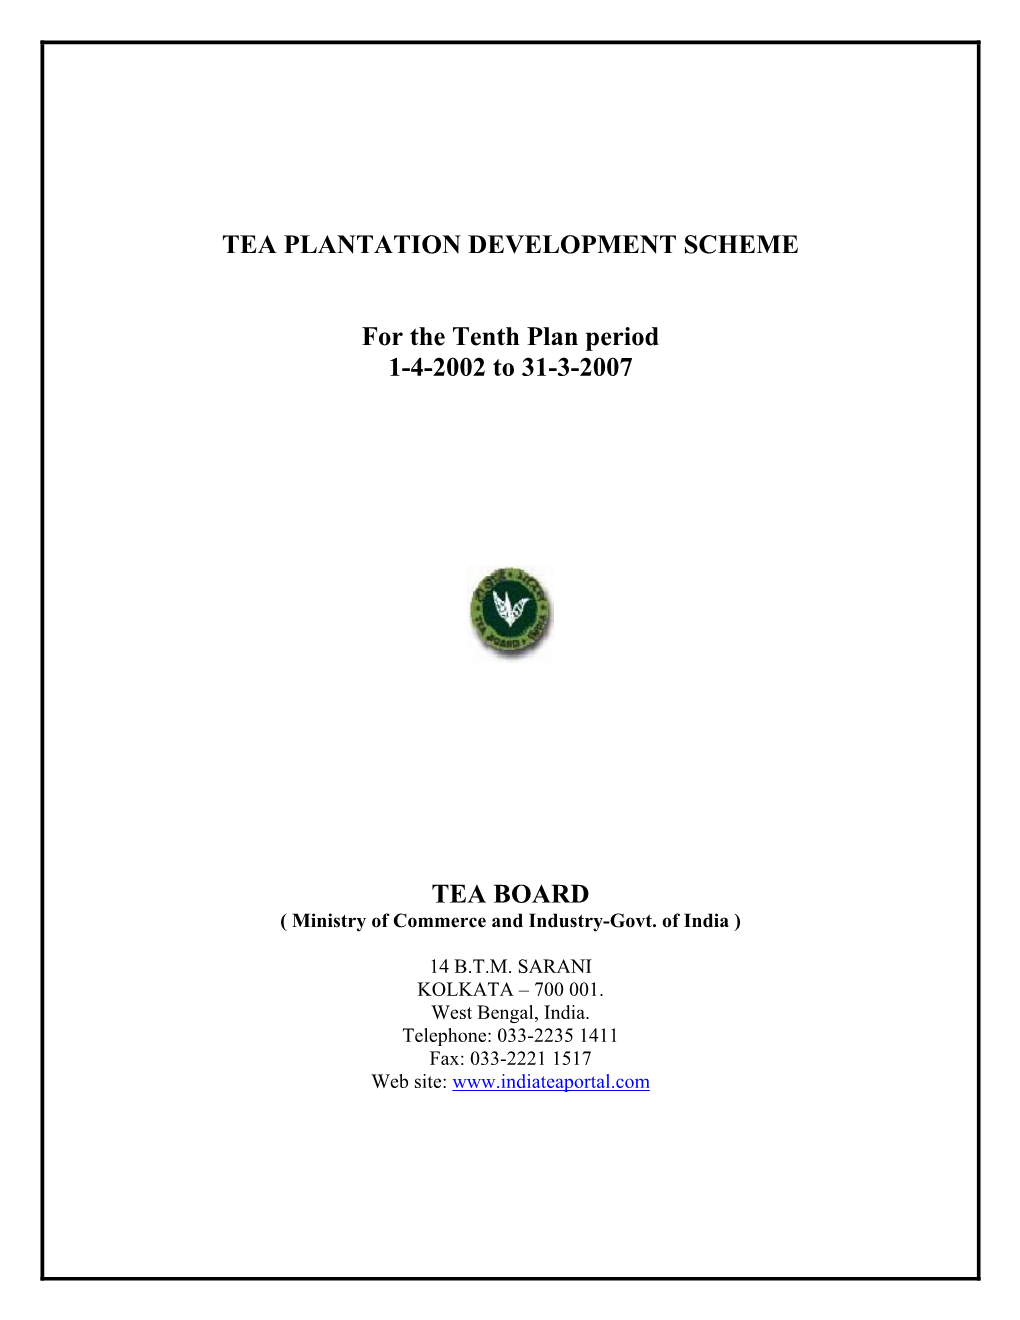 TEA PLANTATION DEVELOPMENT SCHEME for the Tenth Plan Period